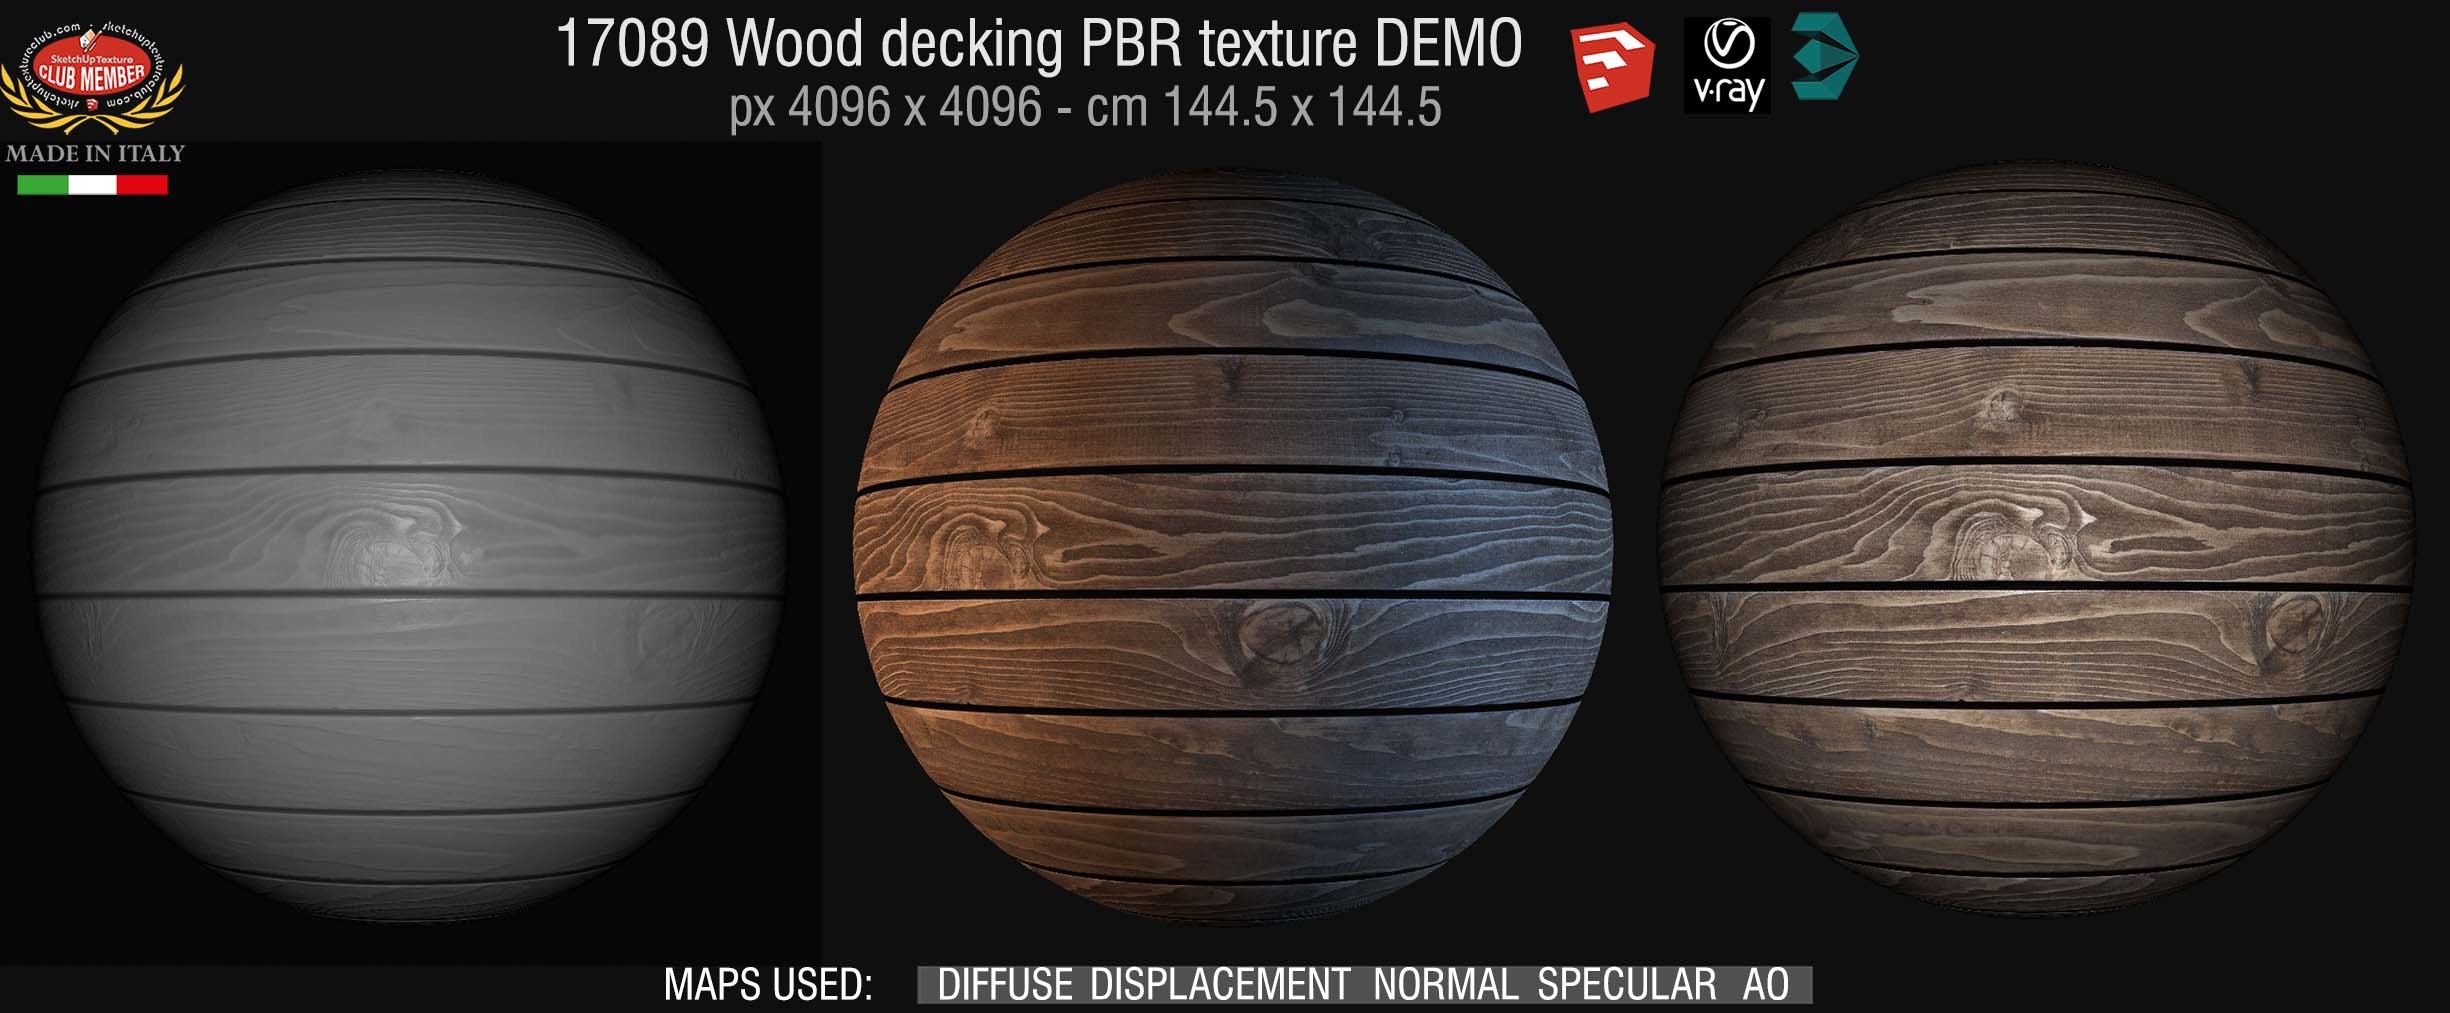 17089 Wood decking PBR texture seamless DEMO